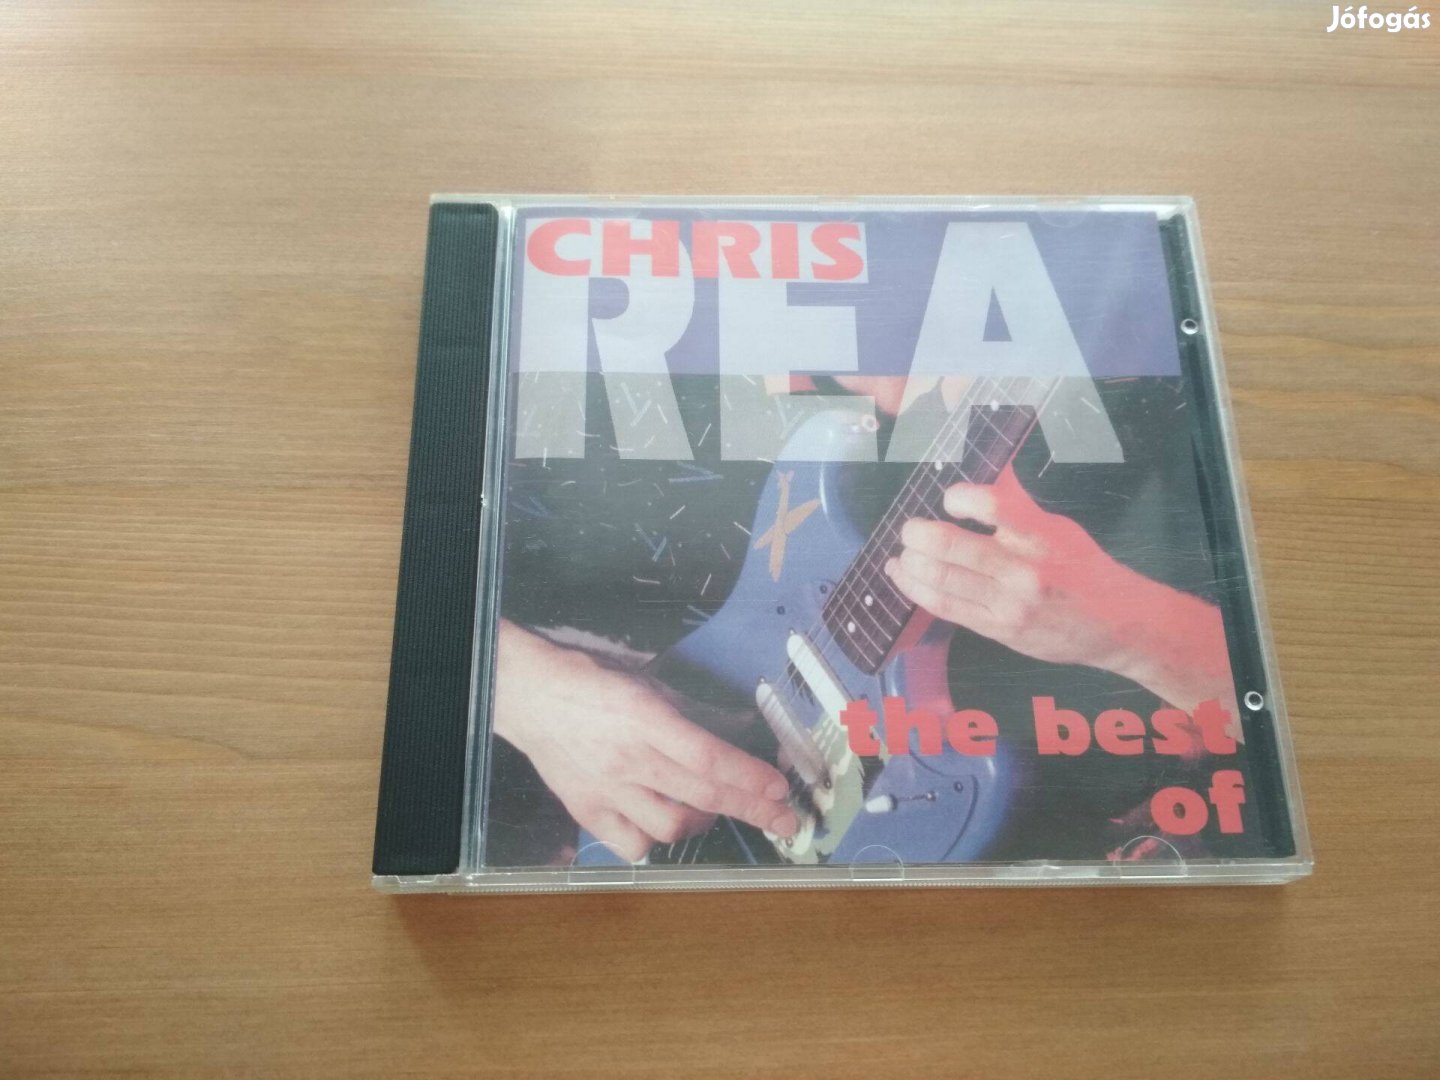 Chris Rea: The best of CD